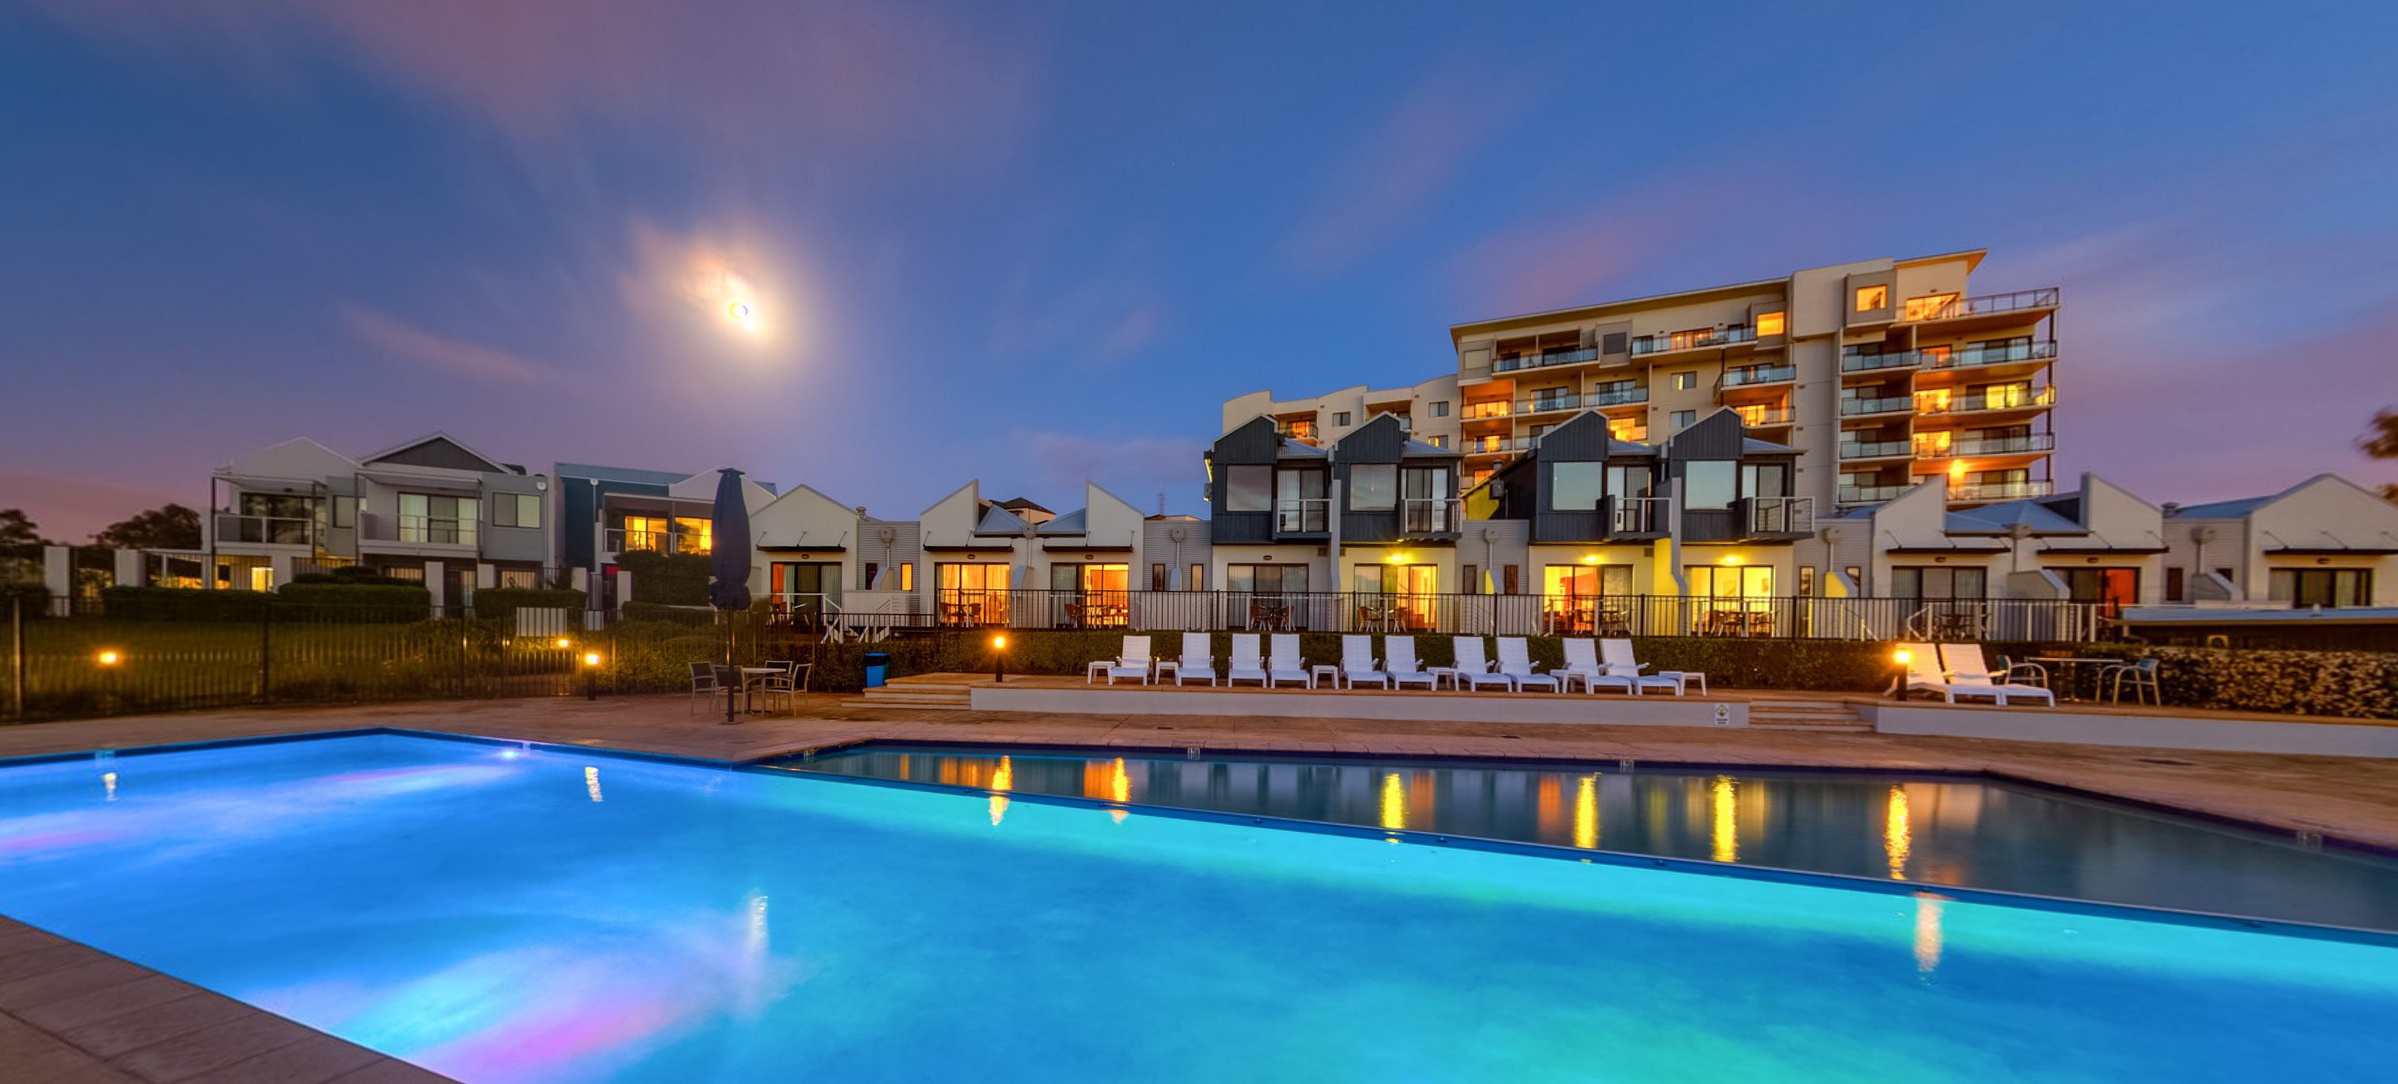 Assured Ascot Quays Apartment Hotel - Accommodation Perth